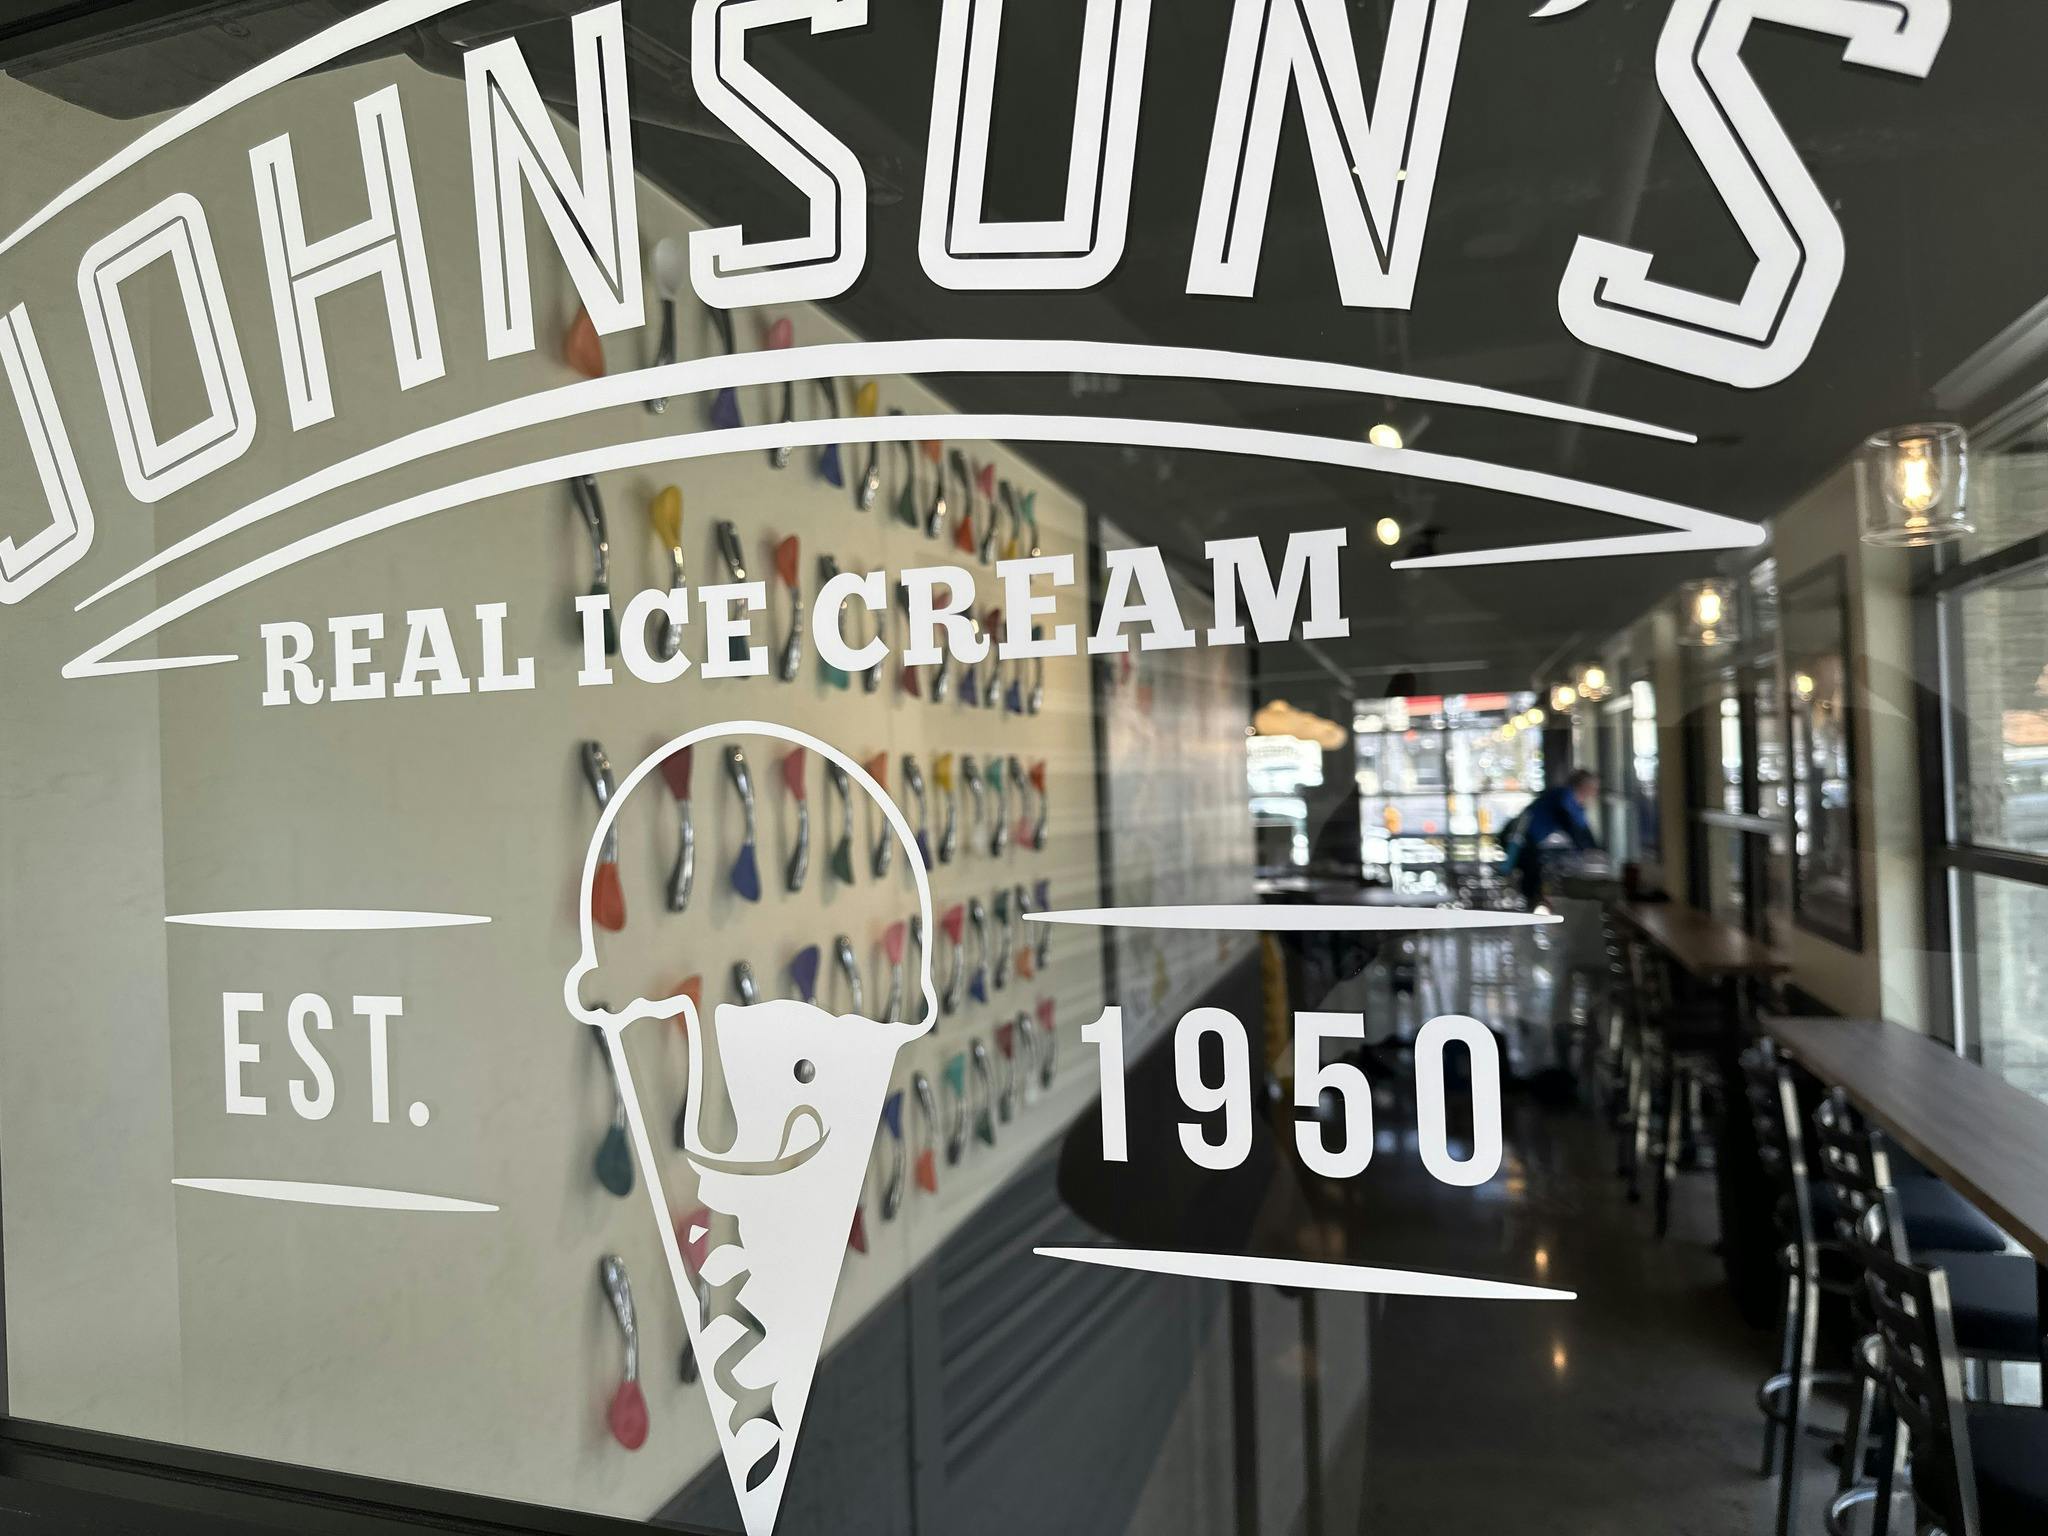 Image of Johnson's Real Ice Cream Dublin location